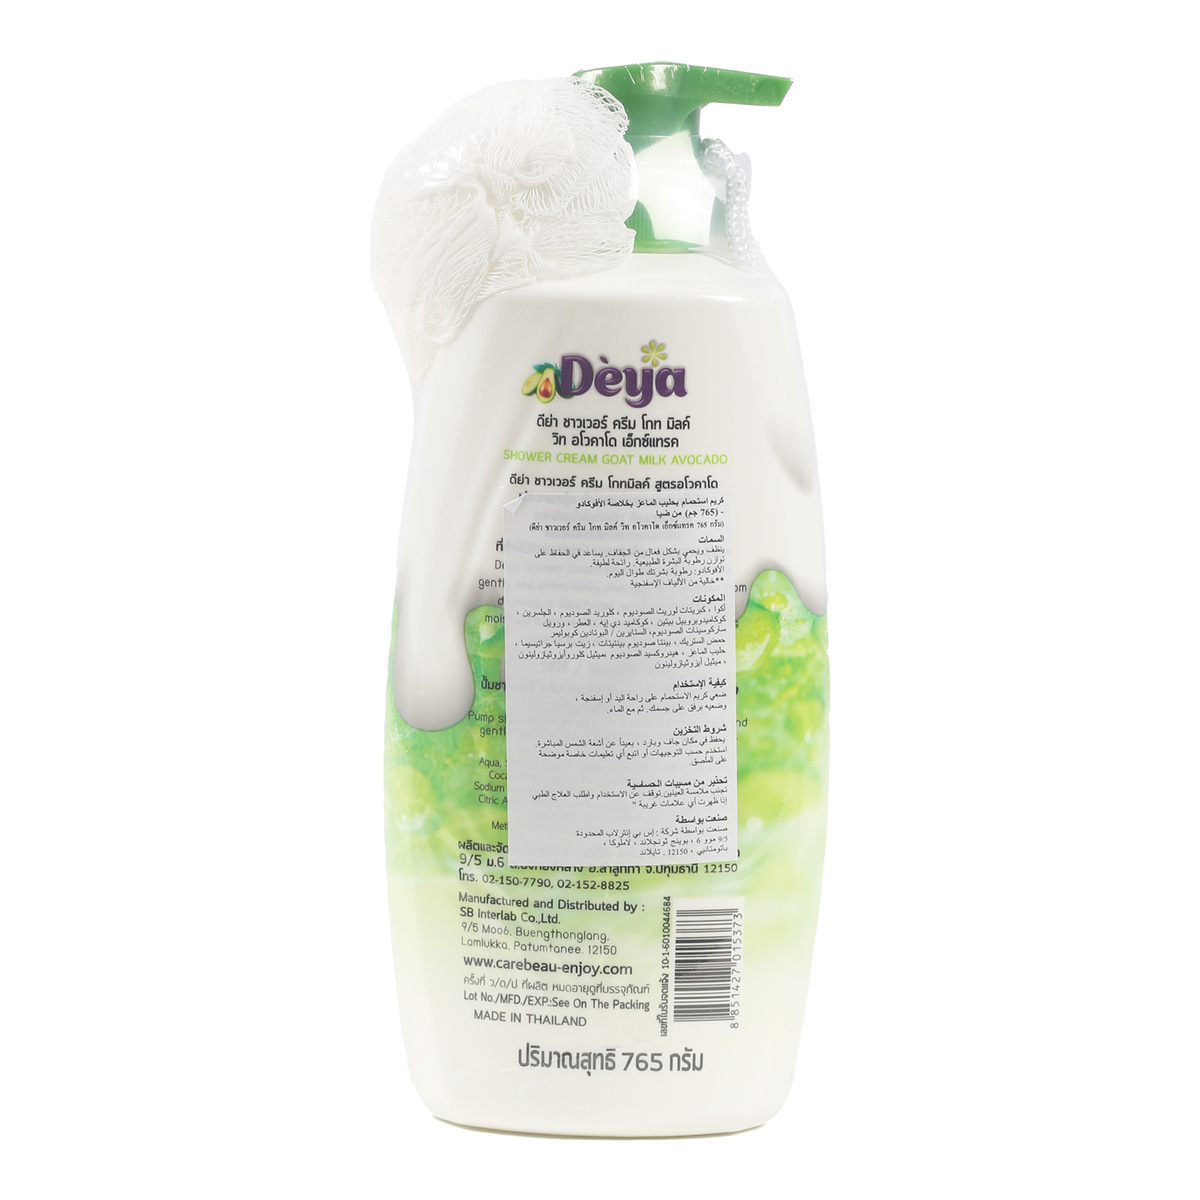 Deya Goat Milk with Avocado Extract Shower Cream 765 g